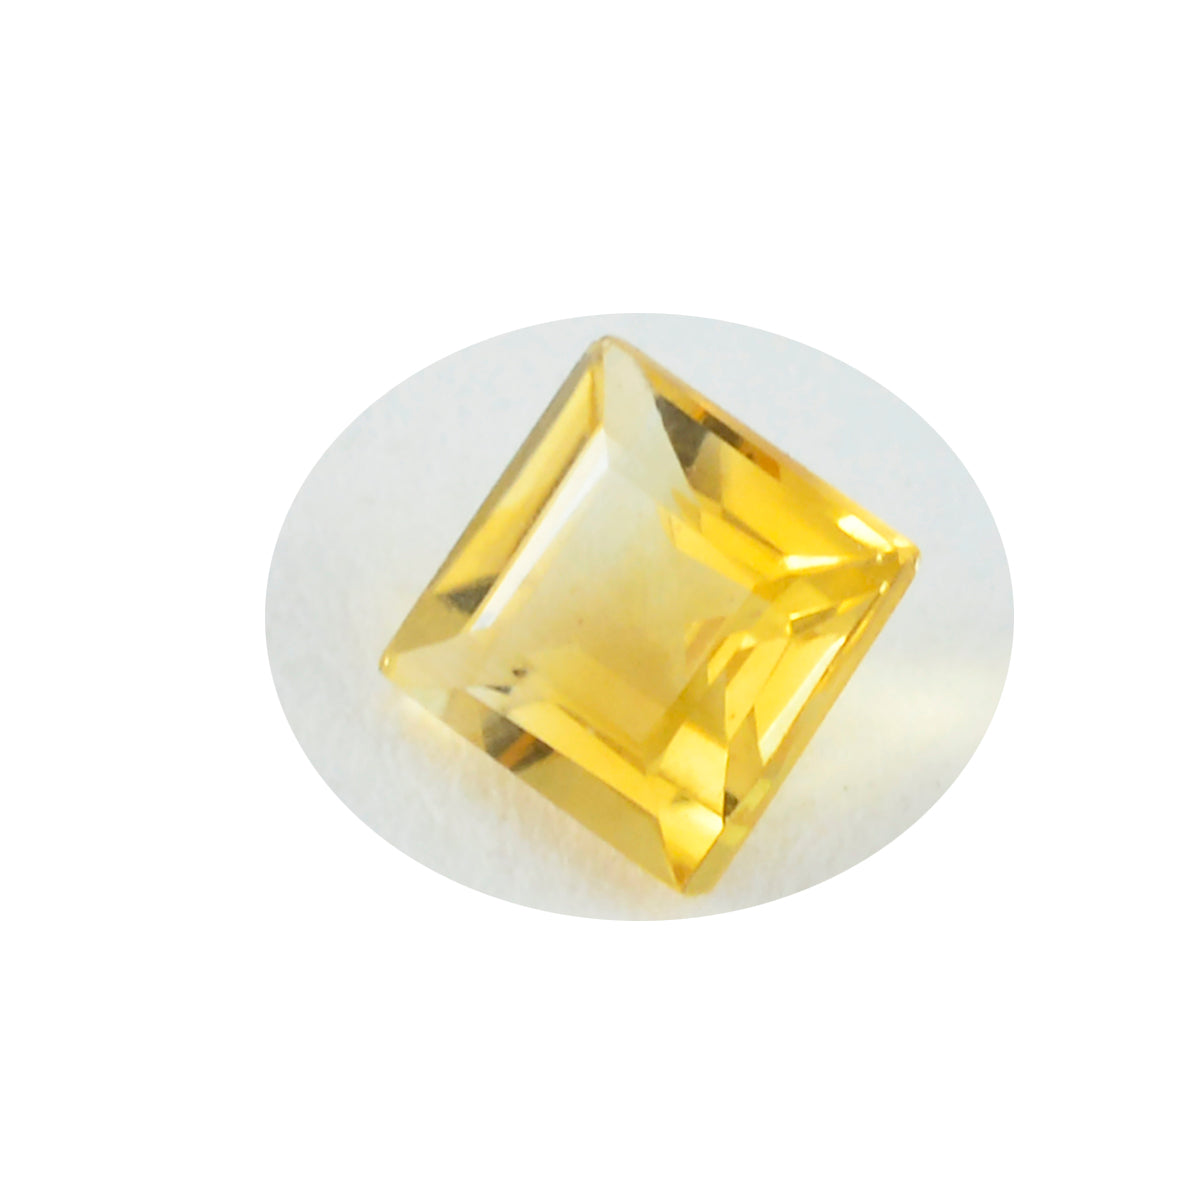 Riyogems 1PC Genuine Yellow Citrine Faceted 11x11 mm Square Shape excellent Quality Gem